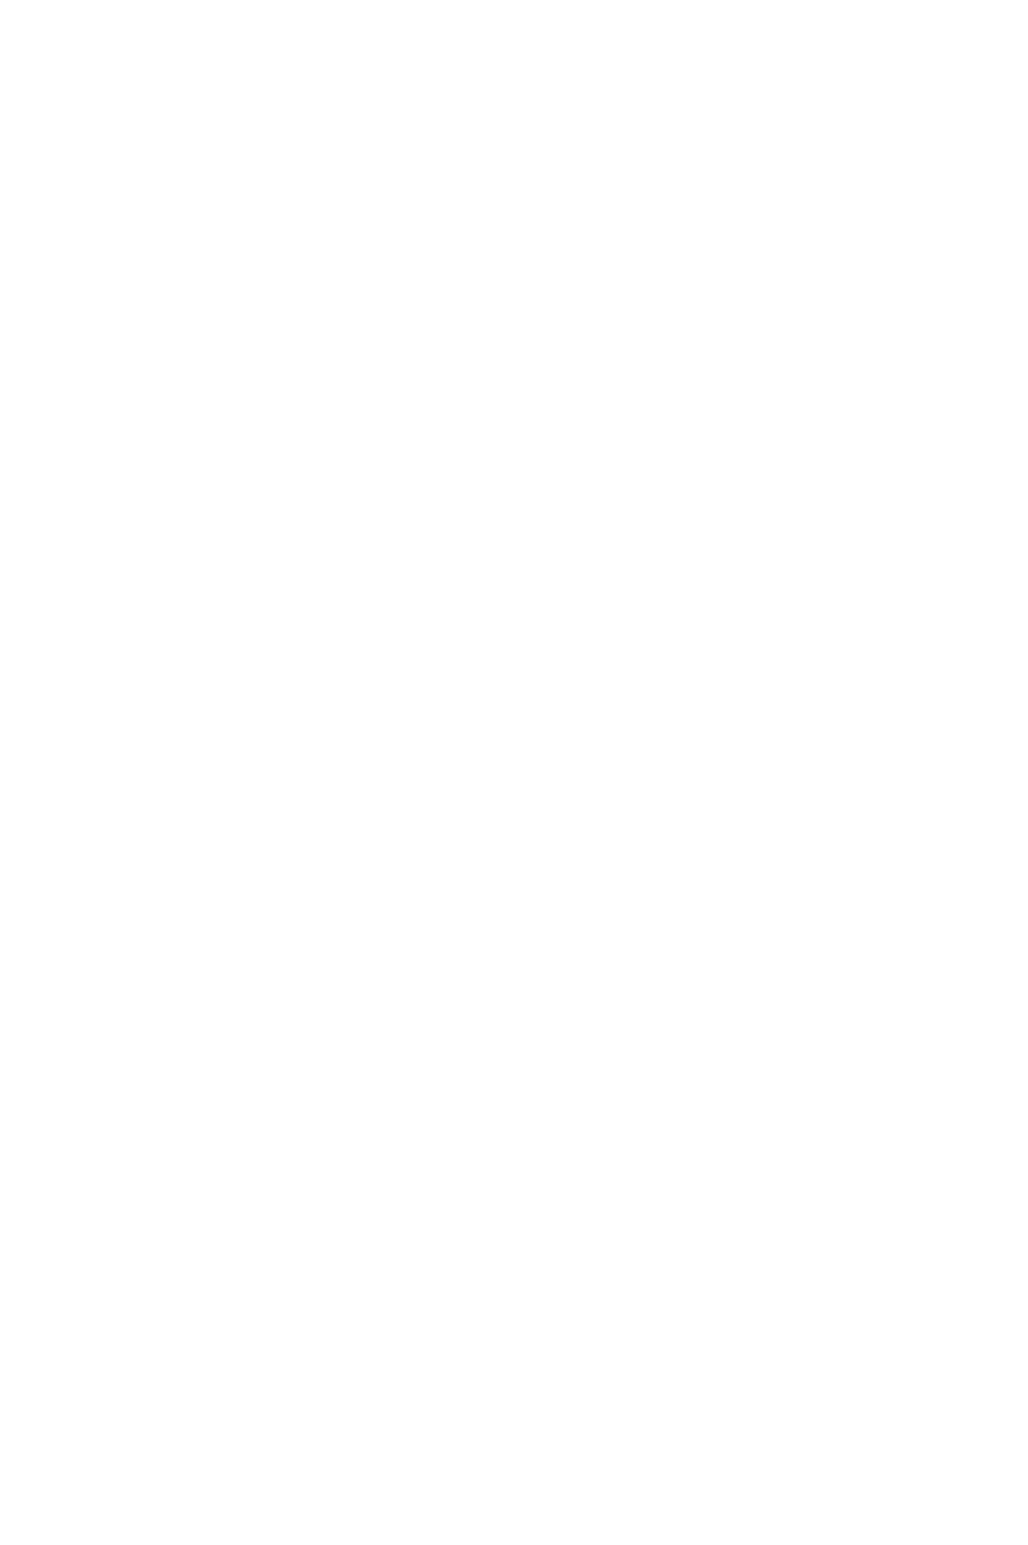 Playstudios logo grand pour les fonds sombres (PNG transparent)